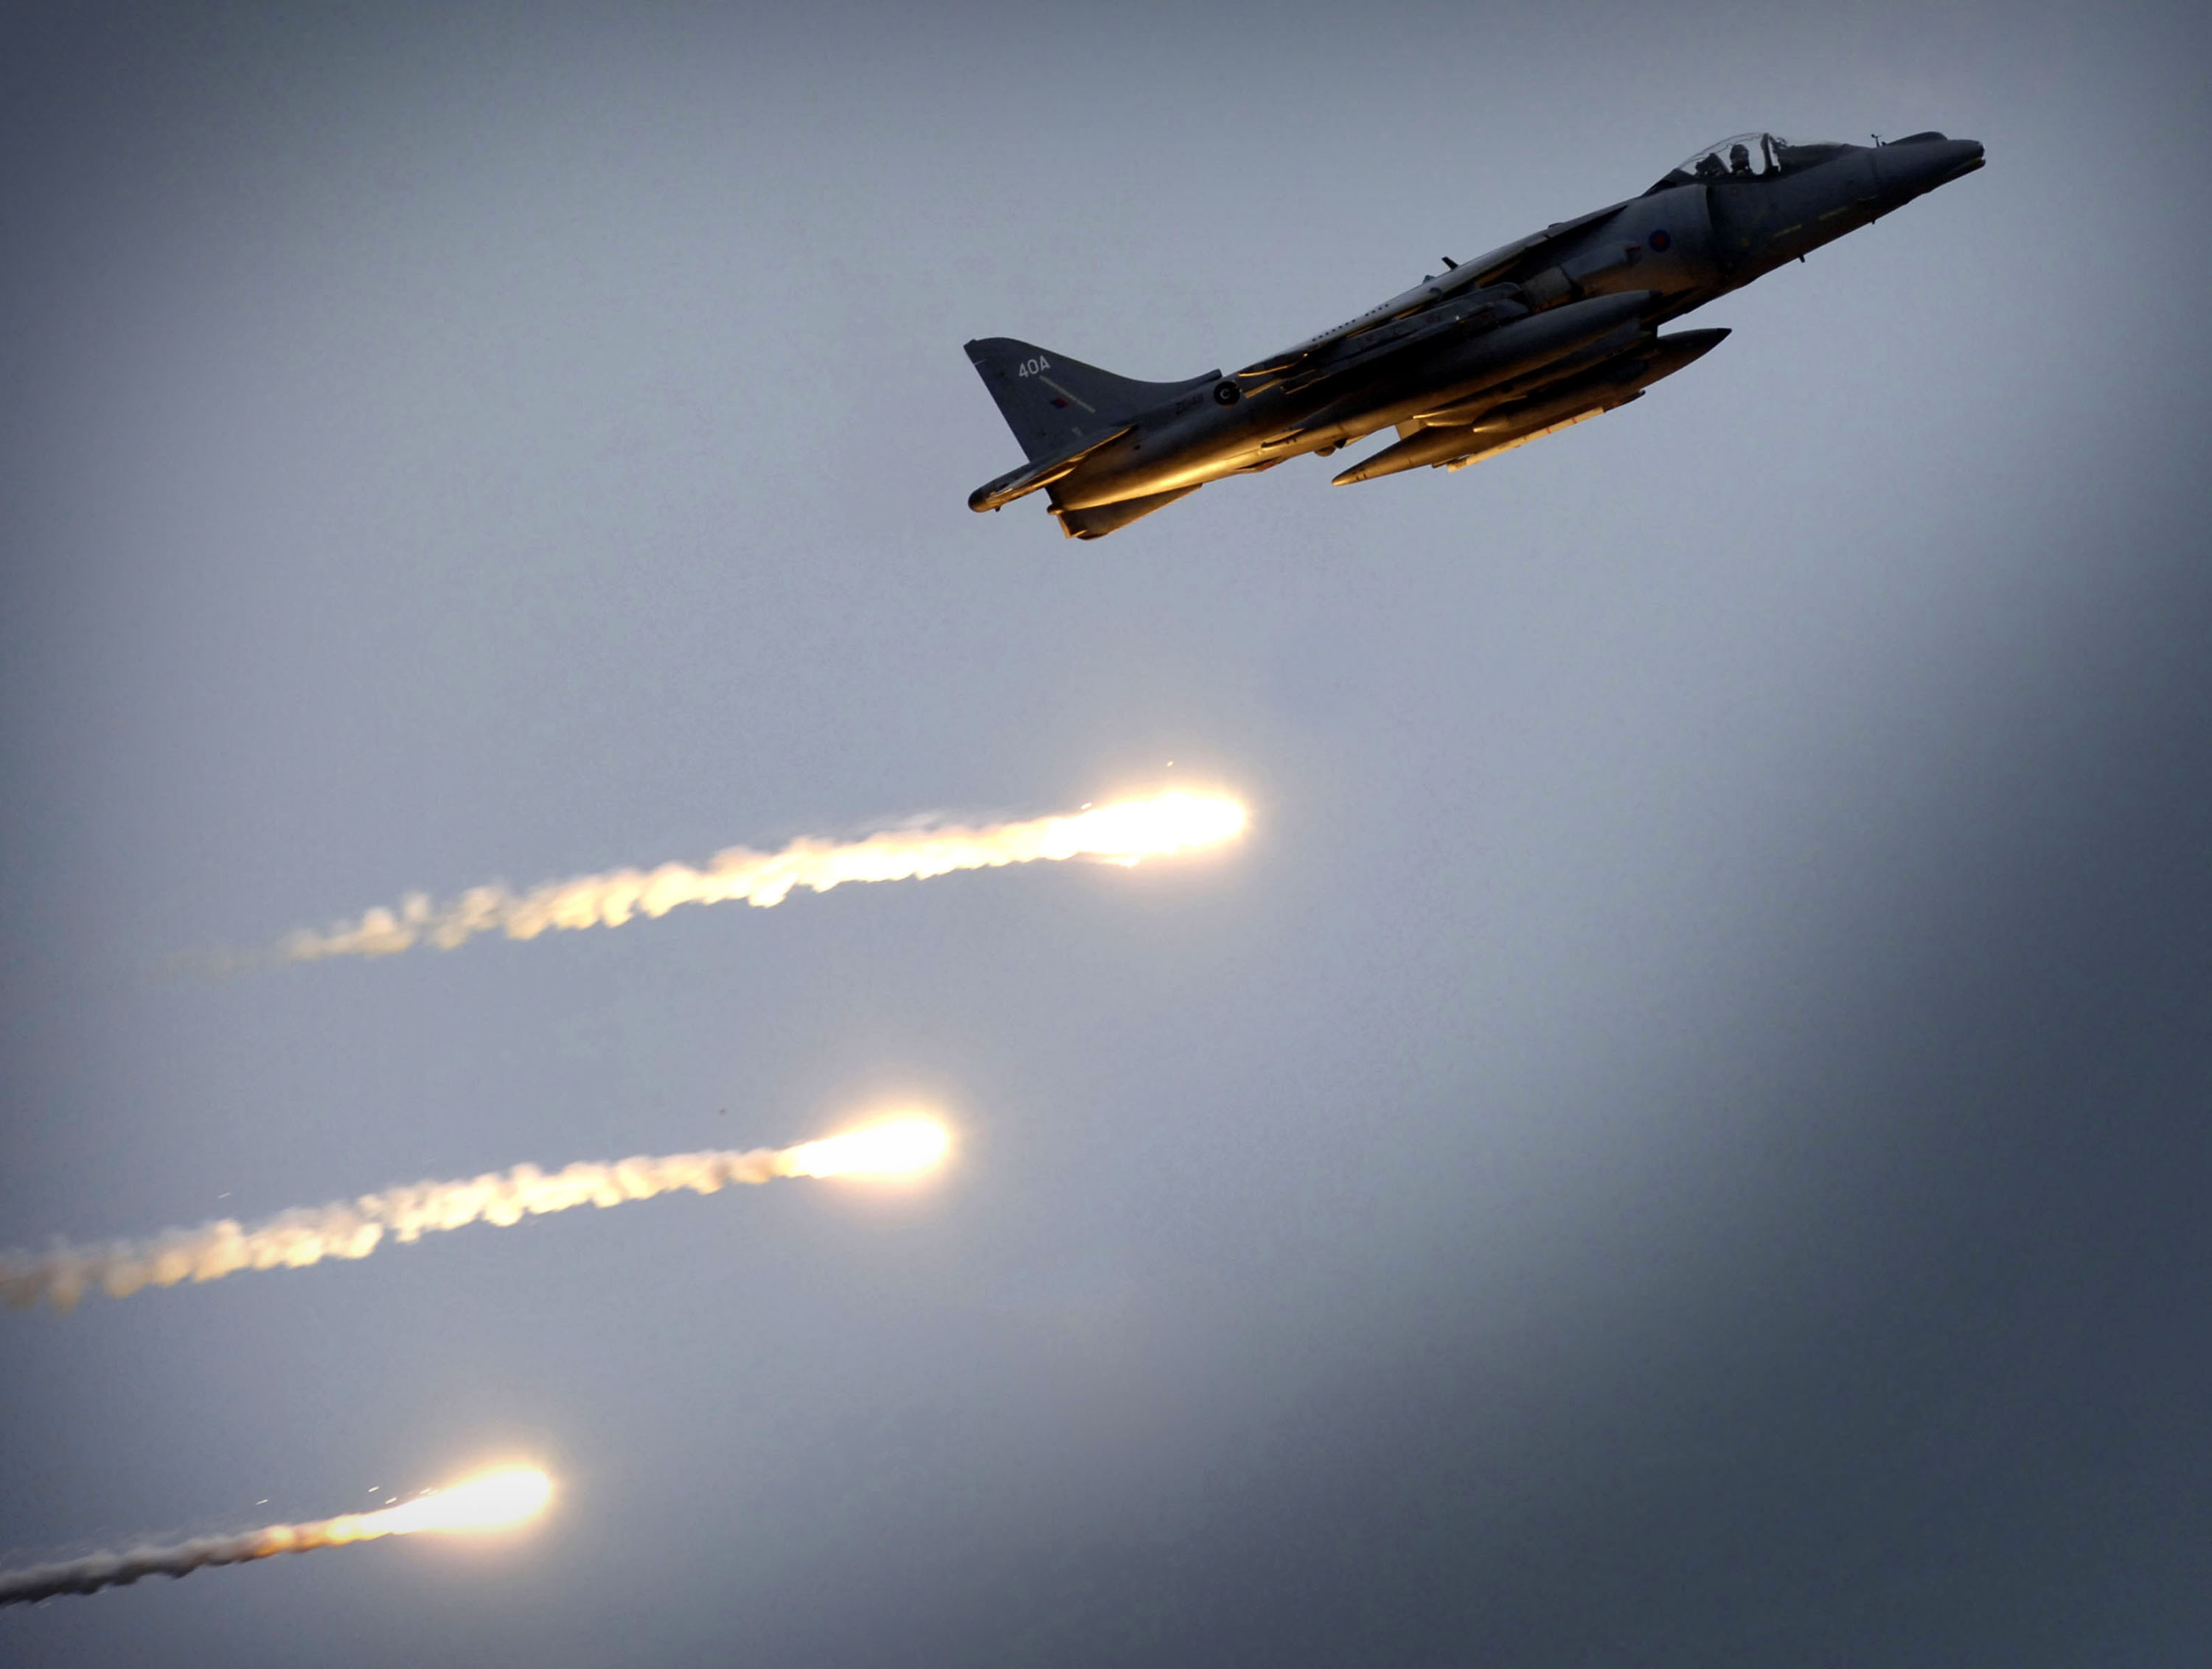 A_Harrier_GR7_of_800_Naval_Air_Squadron_(NAS)_is_shown_firing_decoy_flares._MOD_45147940.jpg